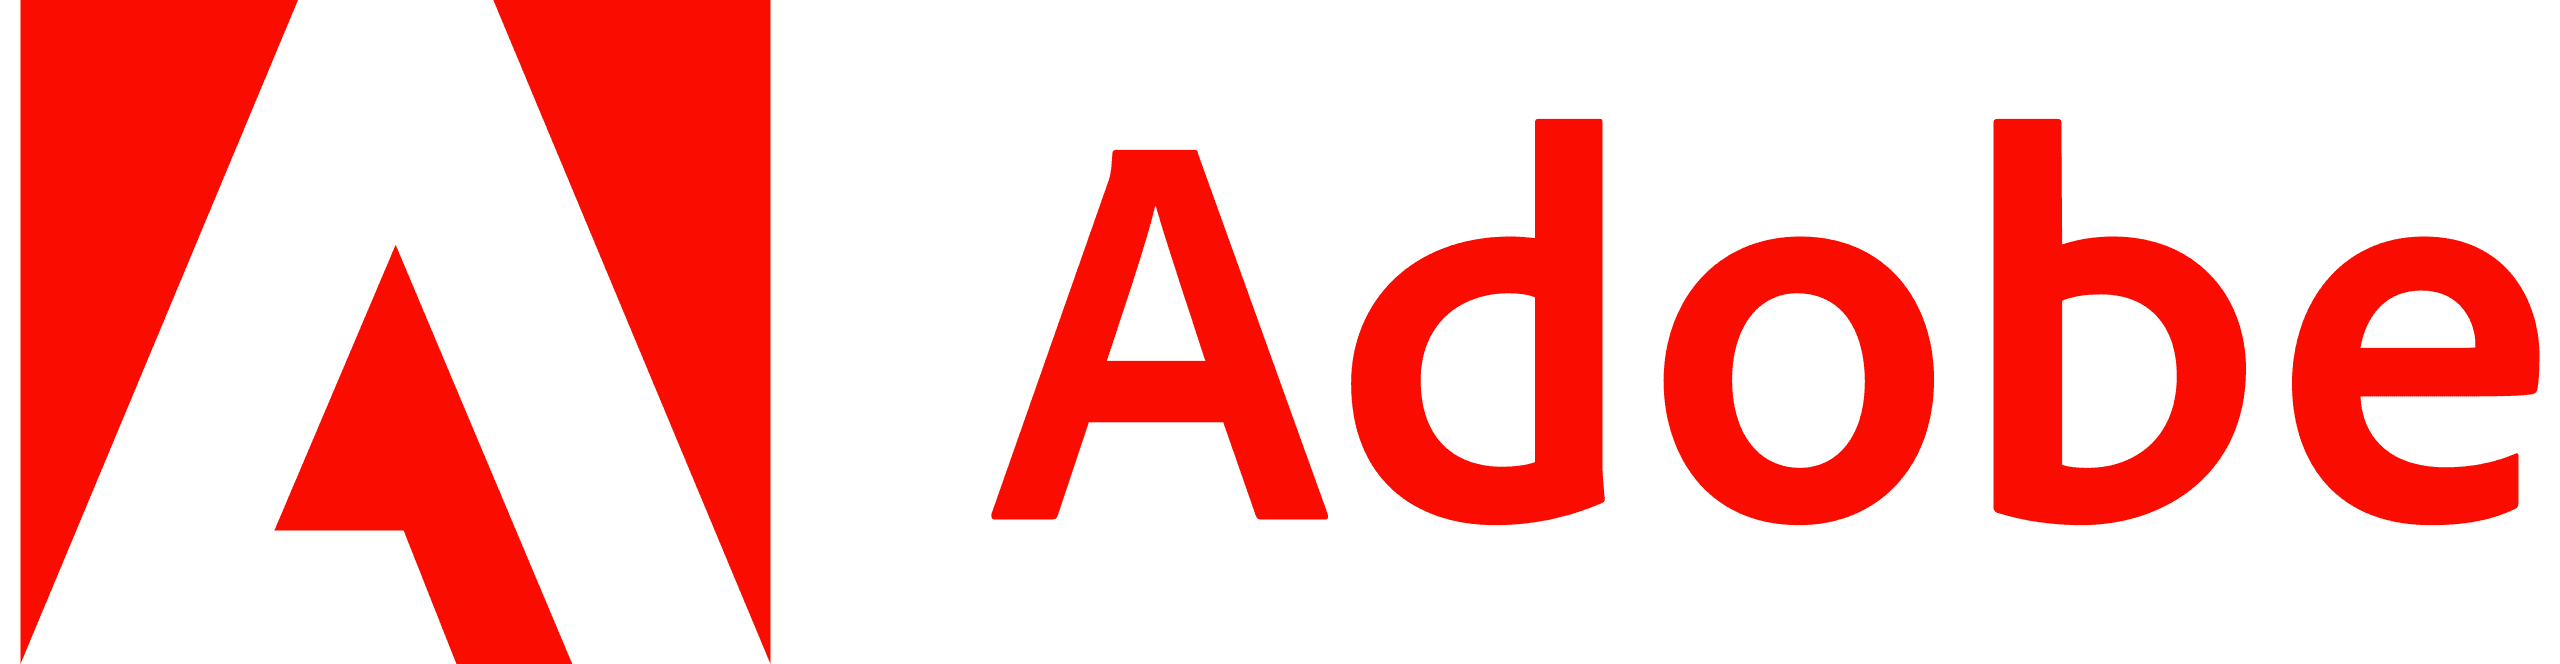 Adobe Partner Logo